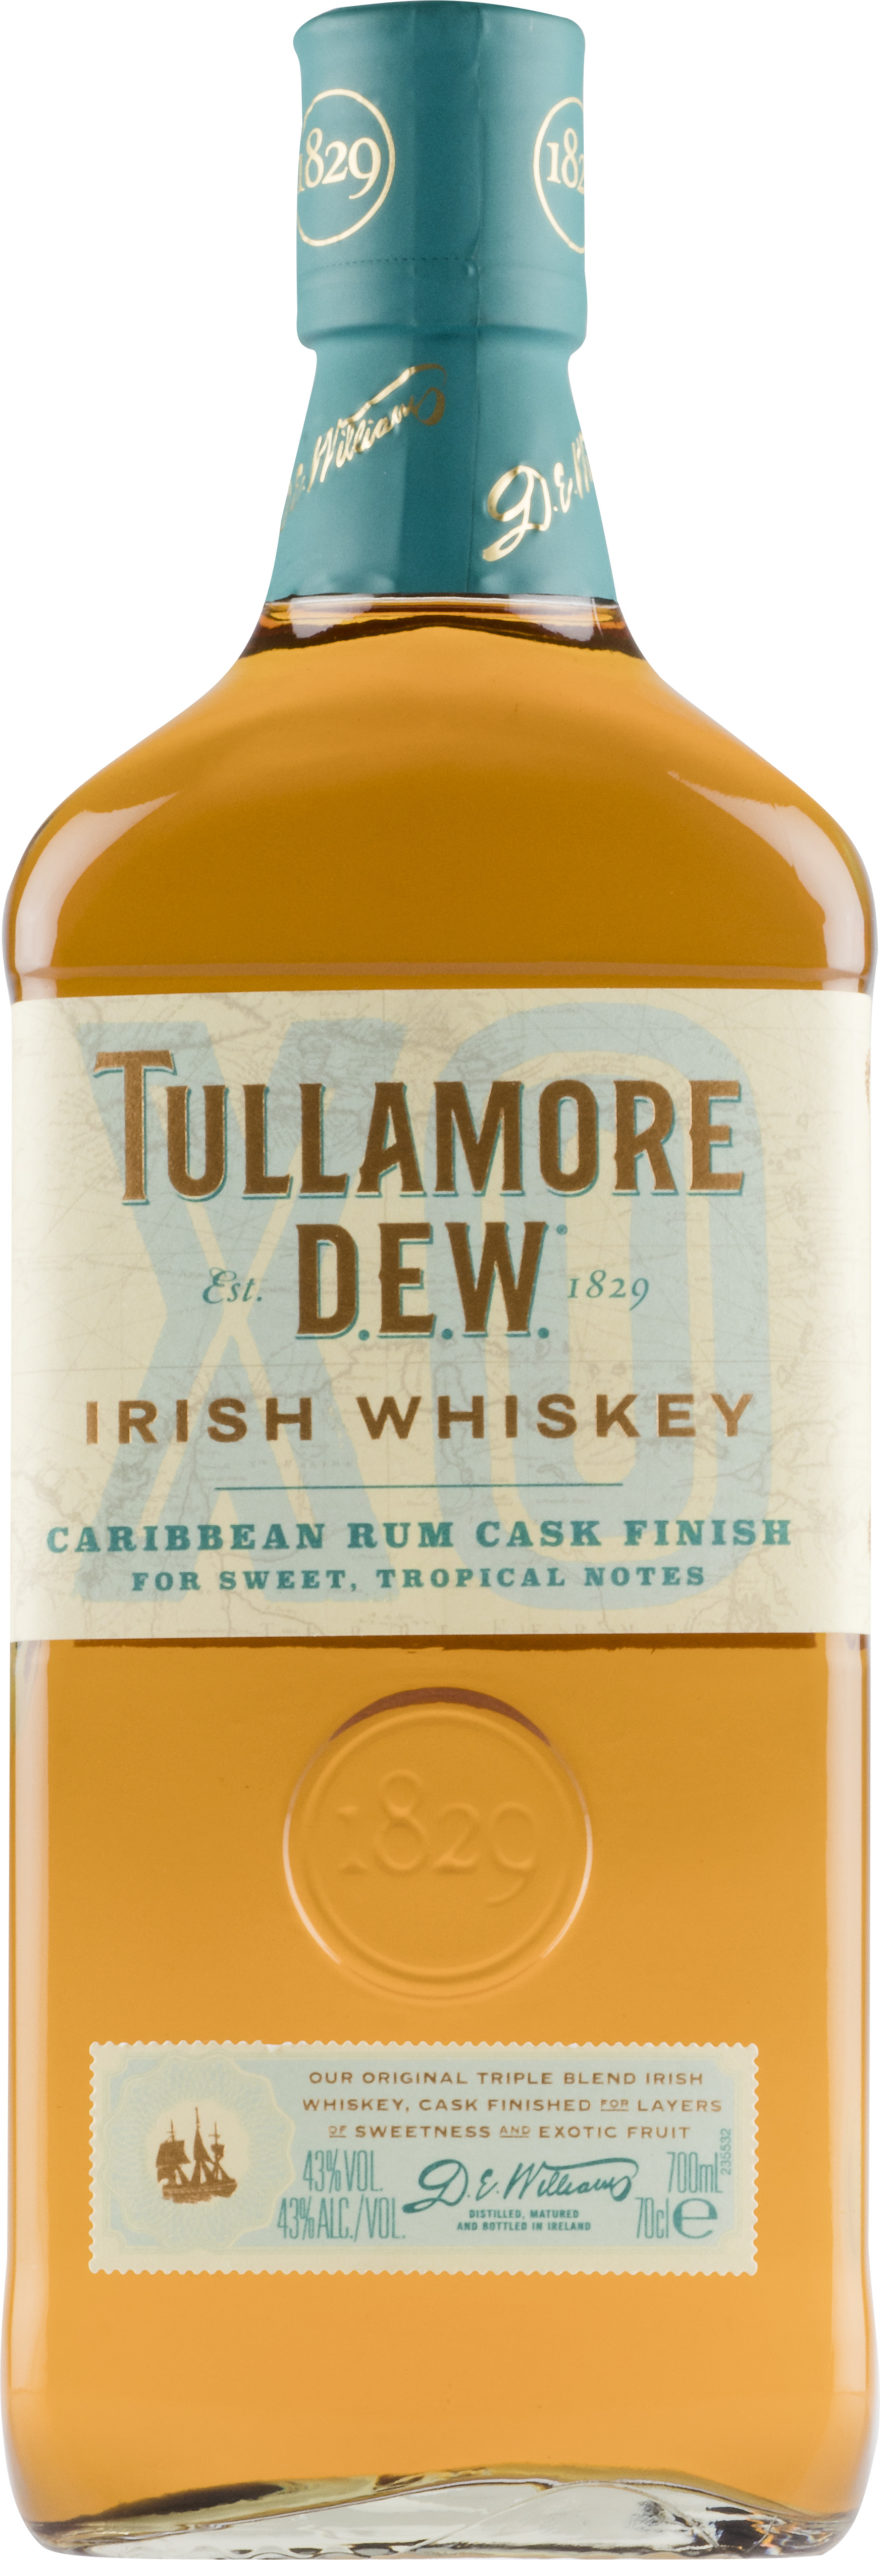 Tullamore D.E.W. X.O. Caribbean Rum Cask Finish